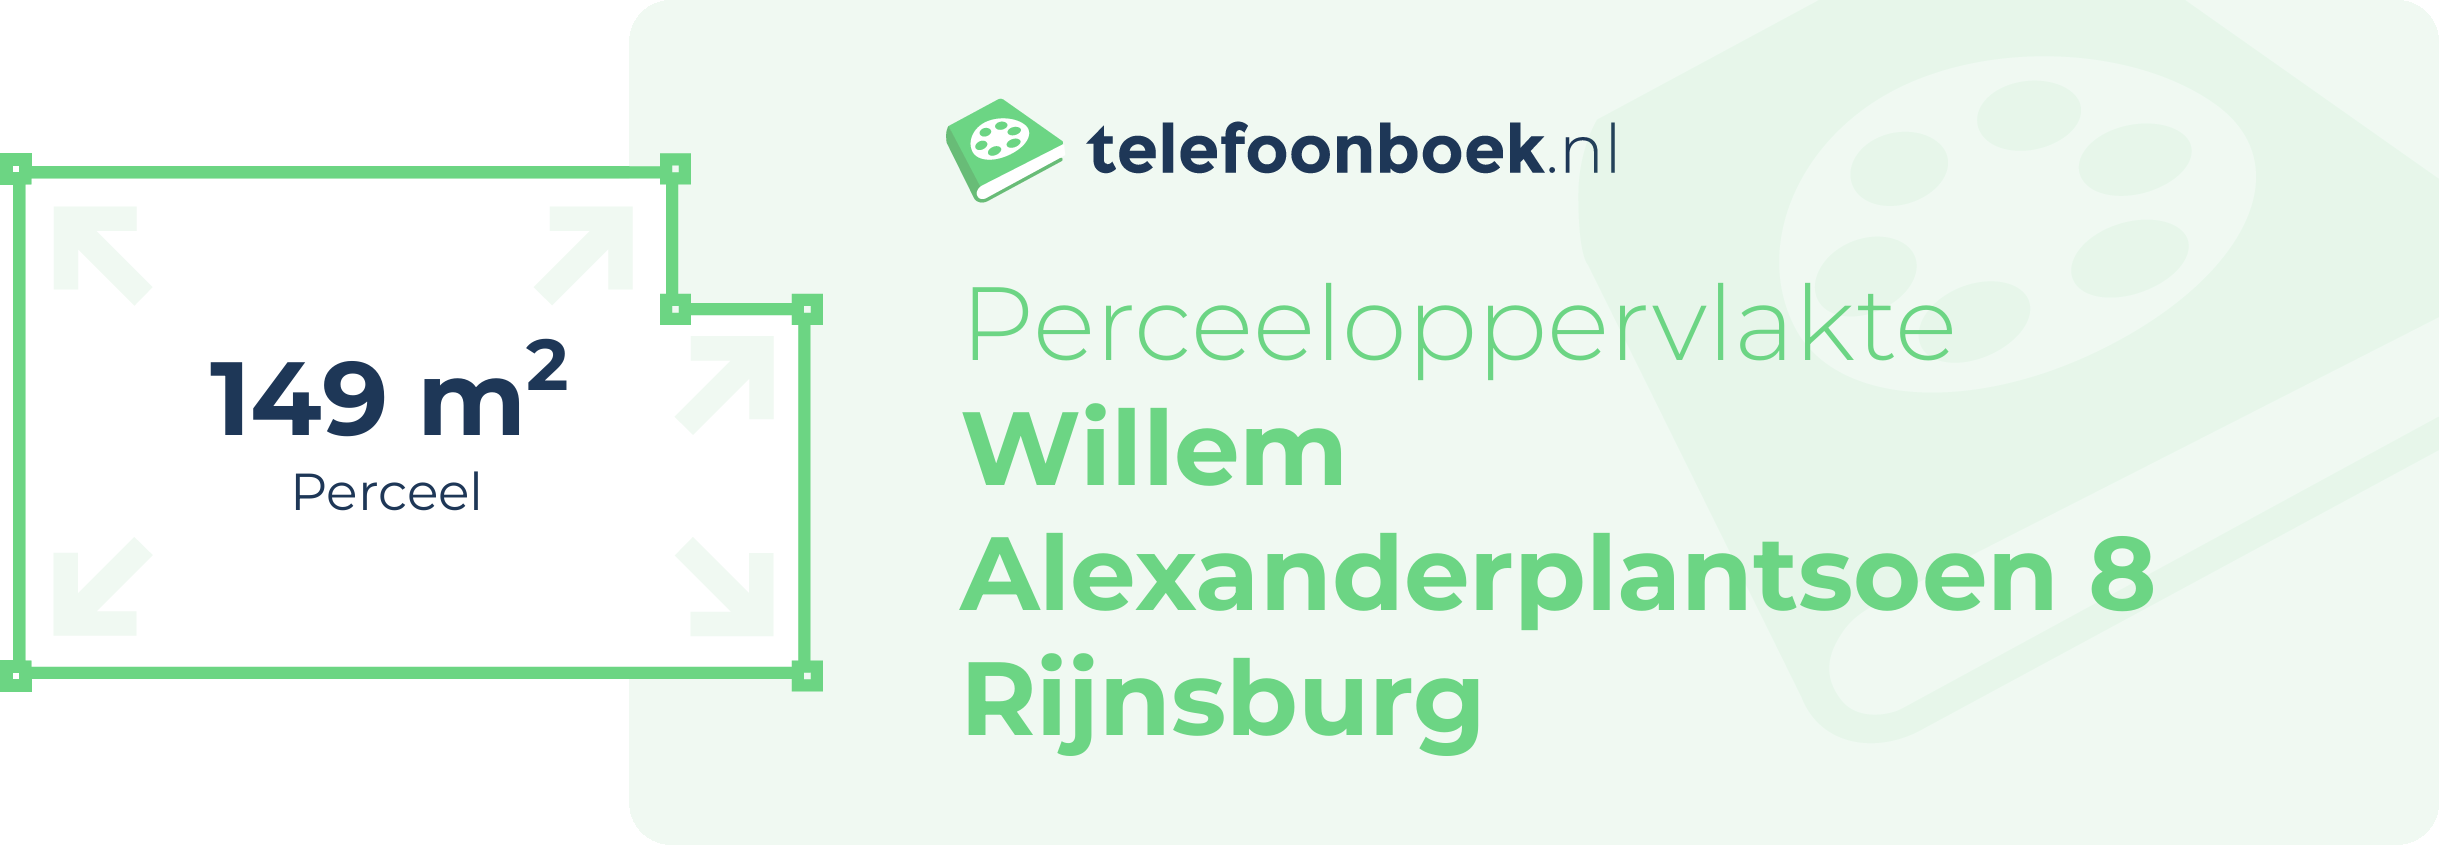 Perceeloppervlakte Willem Alexanderplantsoen 8 Rijnsburg